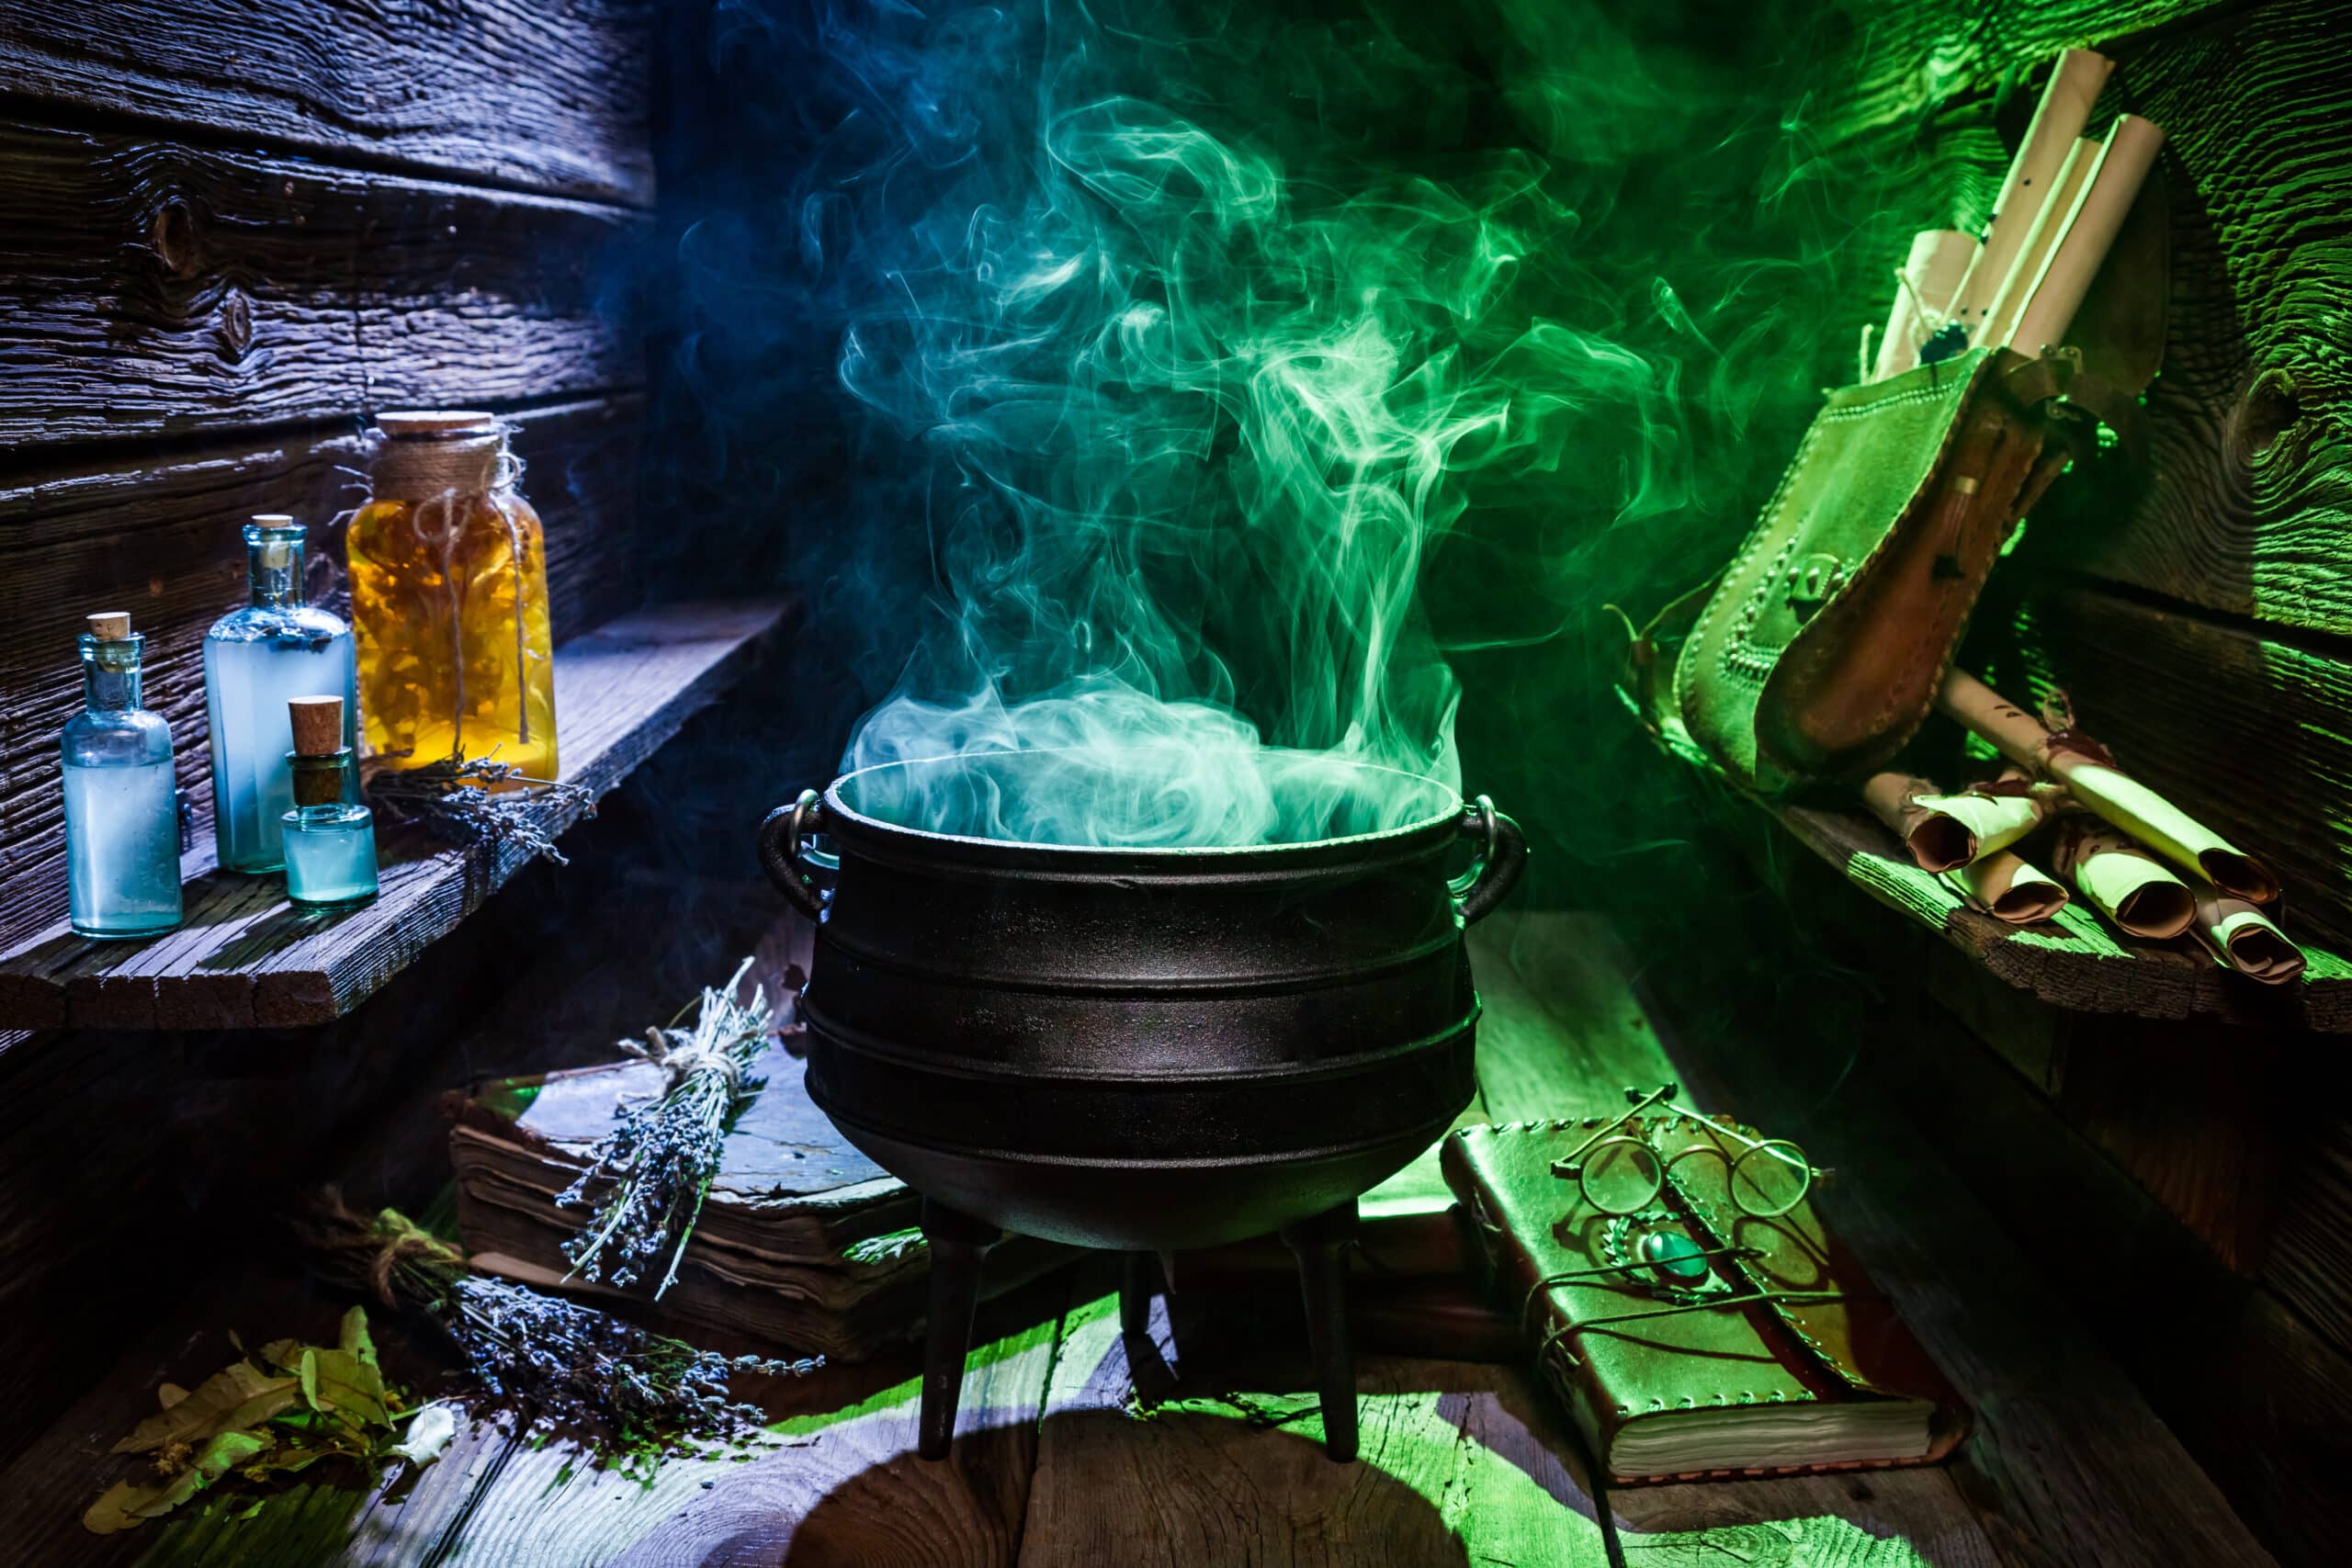 A spooky image of a smoking cauldron